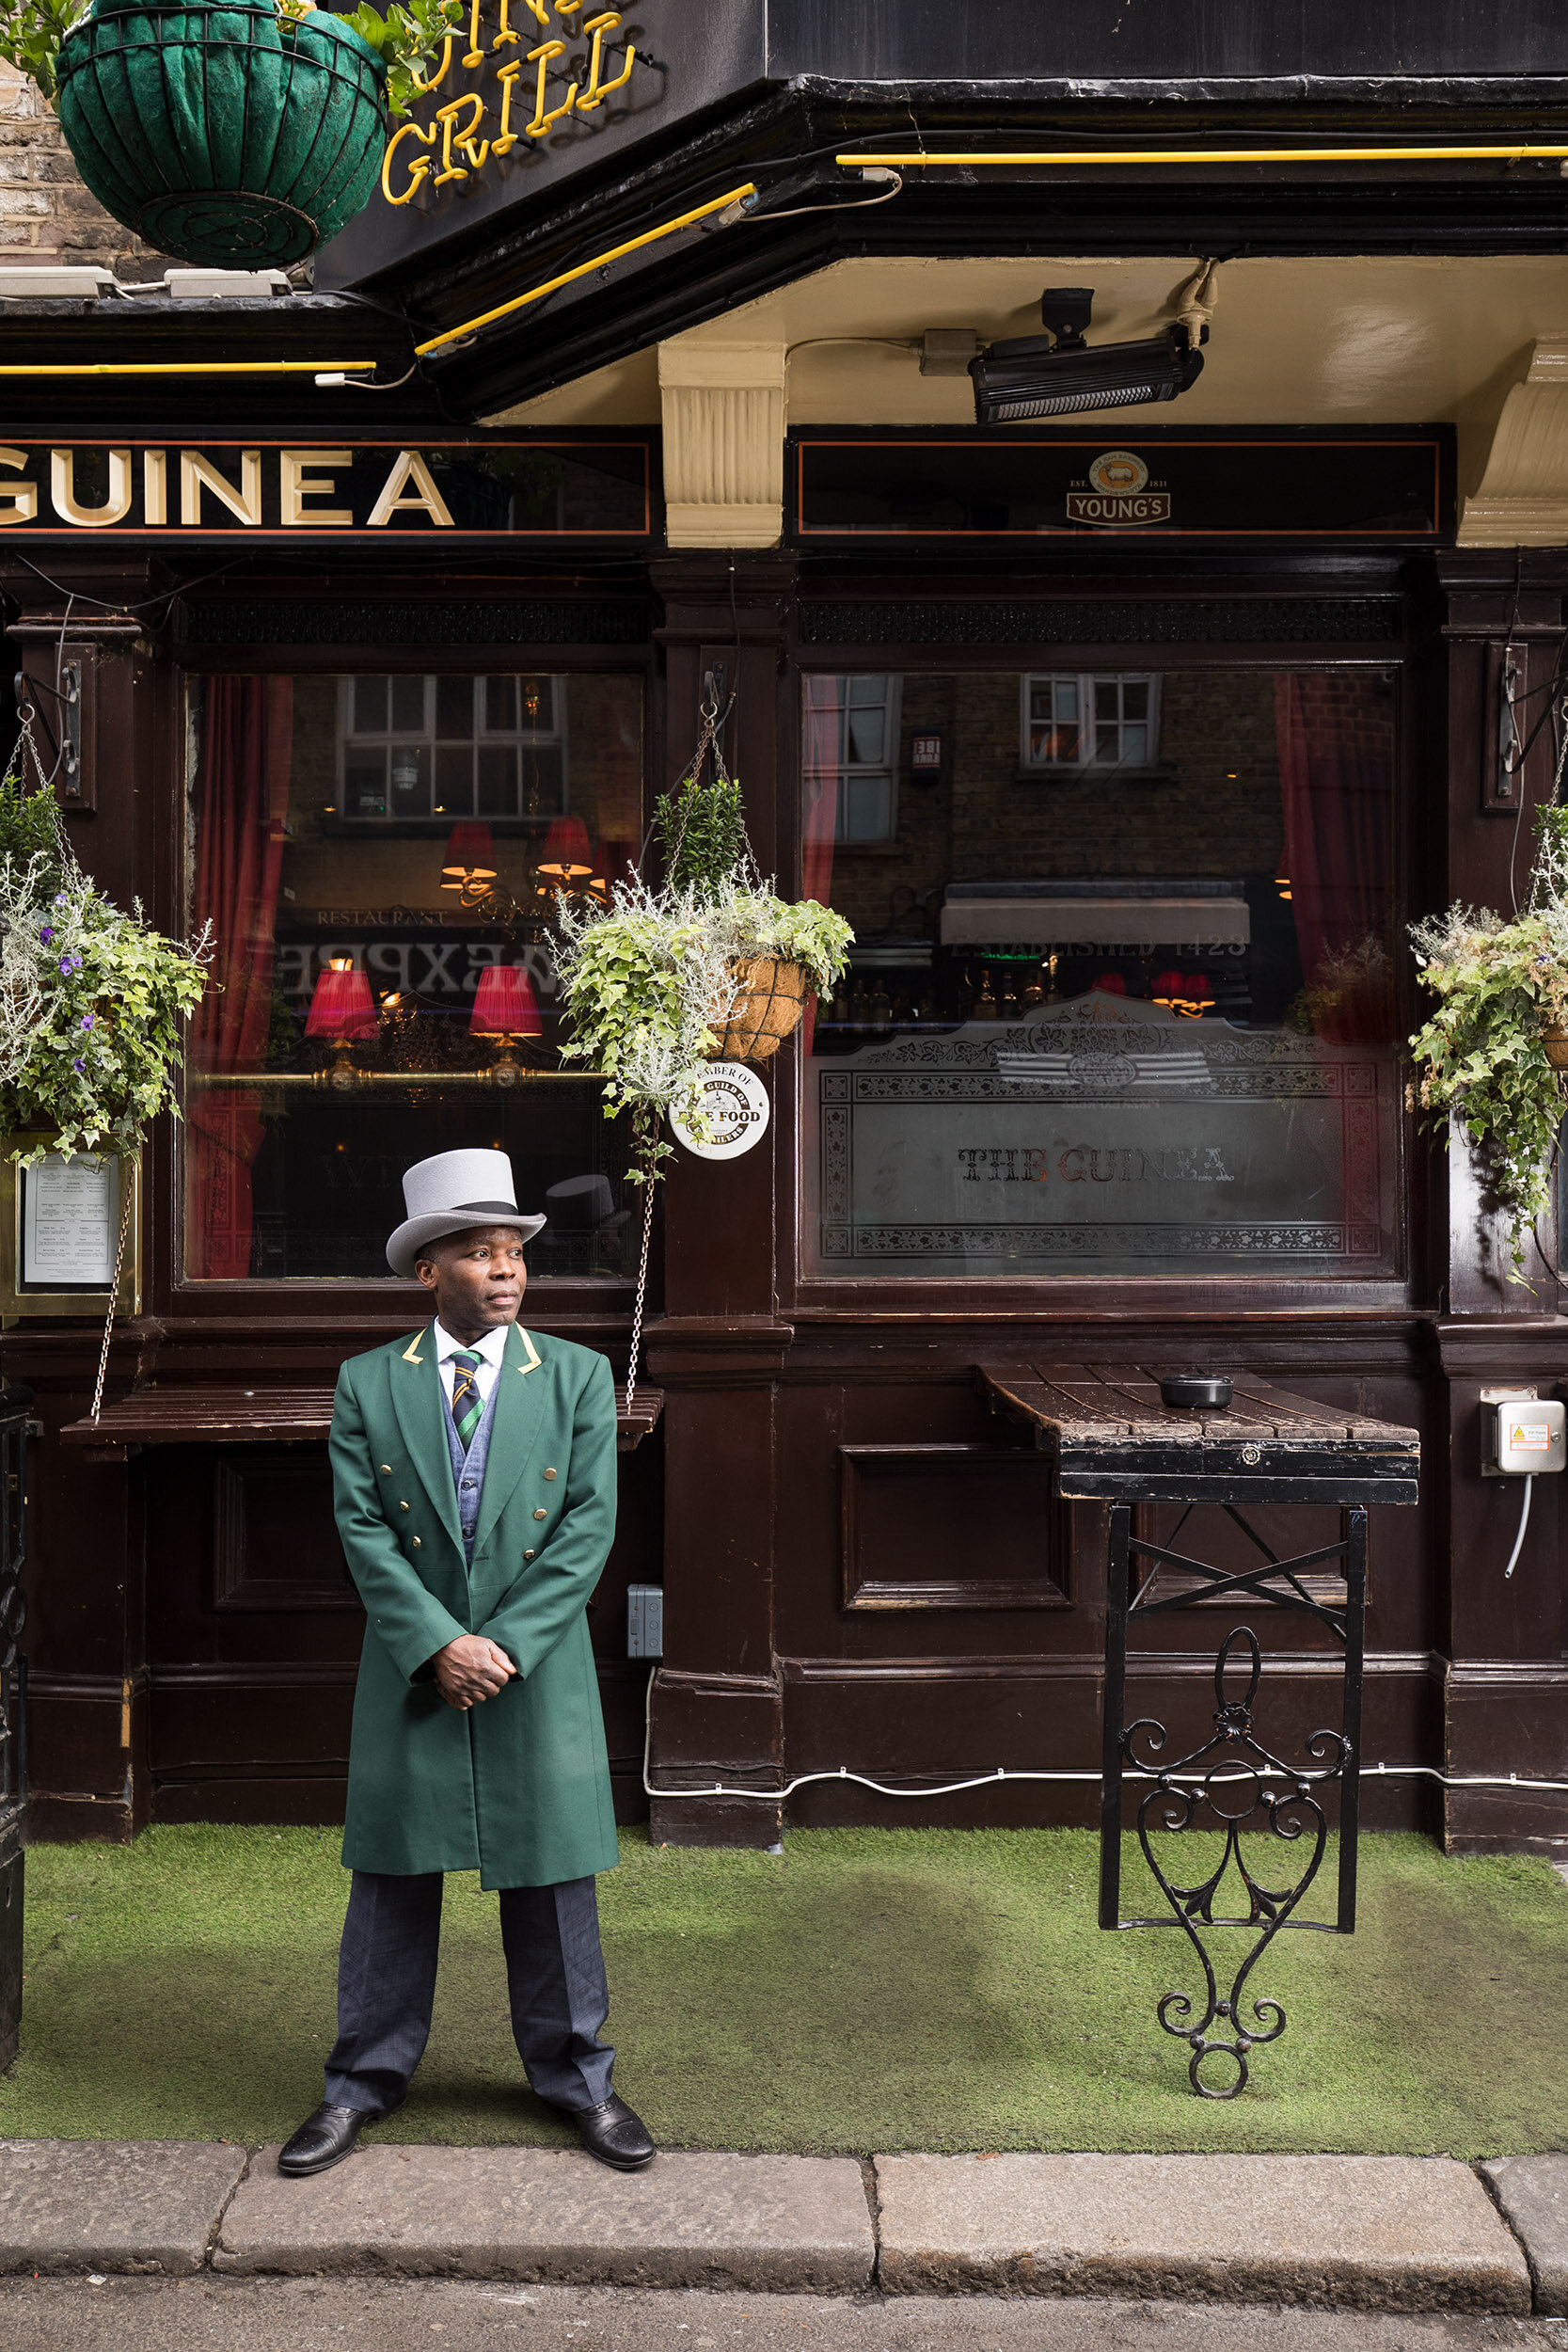 (Guinea Grill) Long Service: London